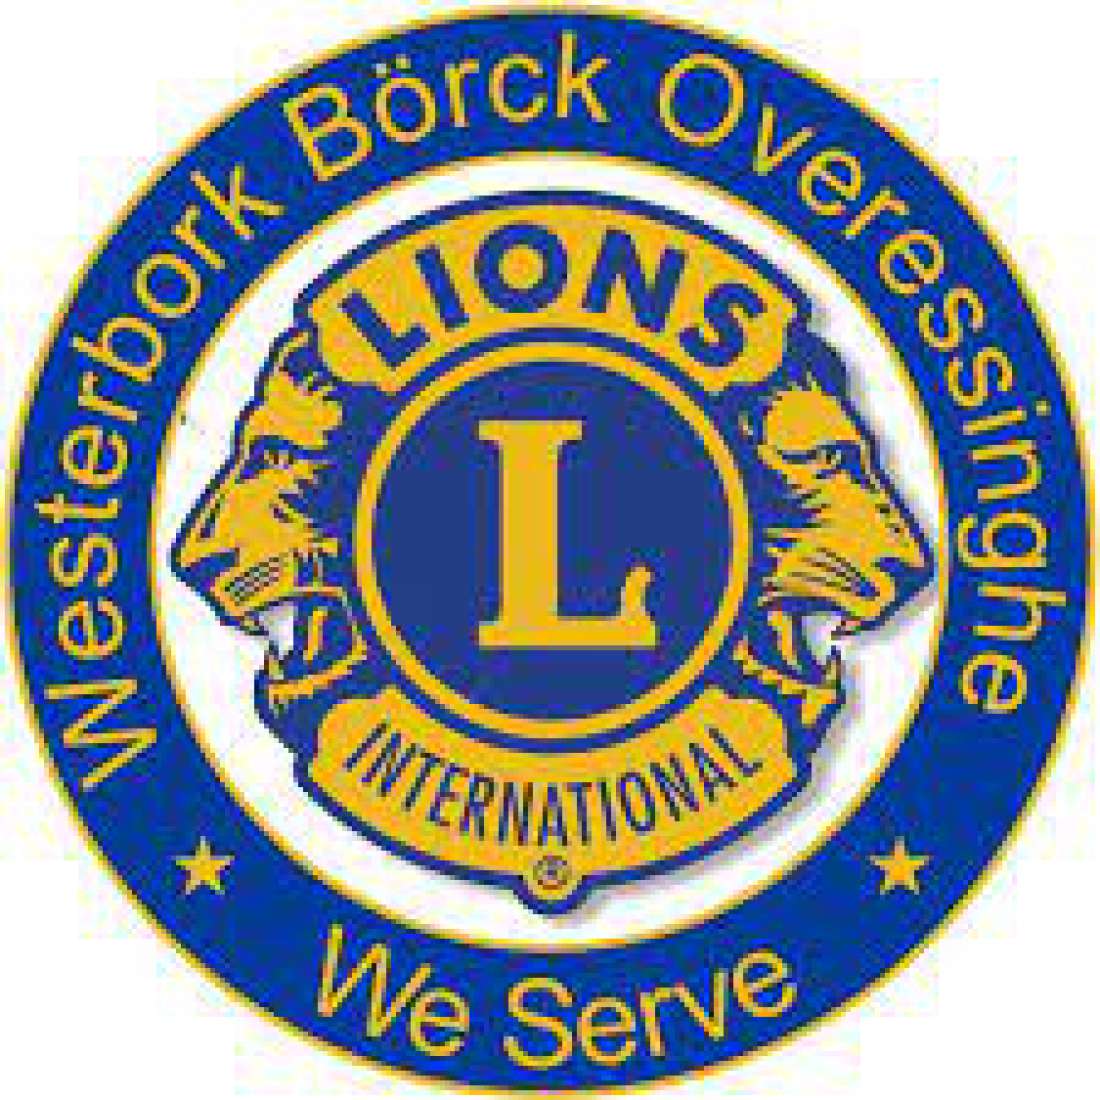 Lions Westerbork